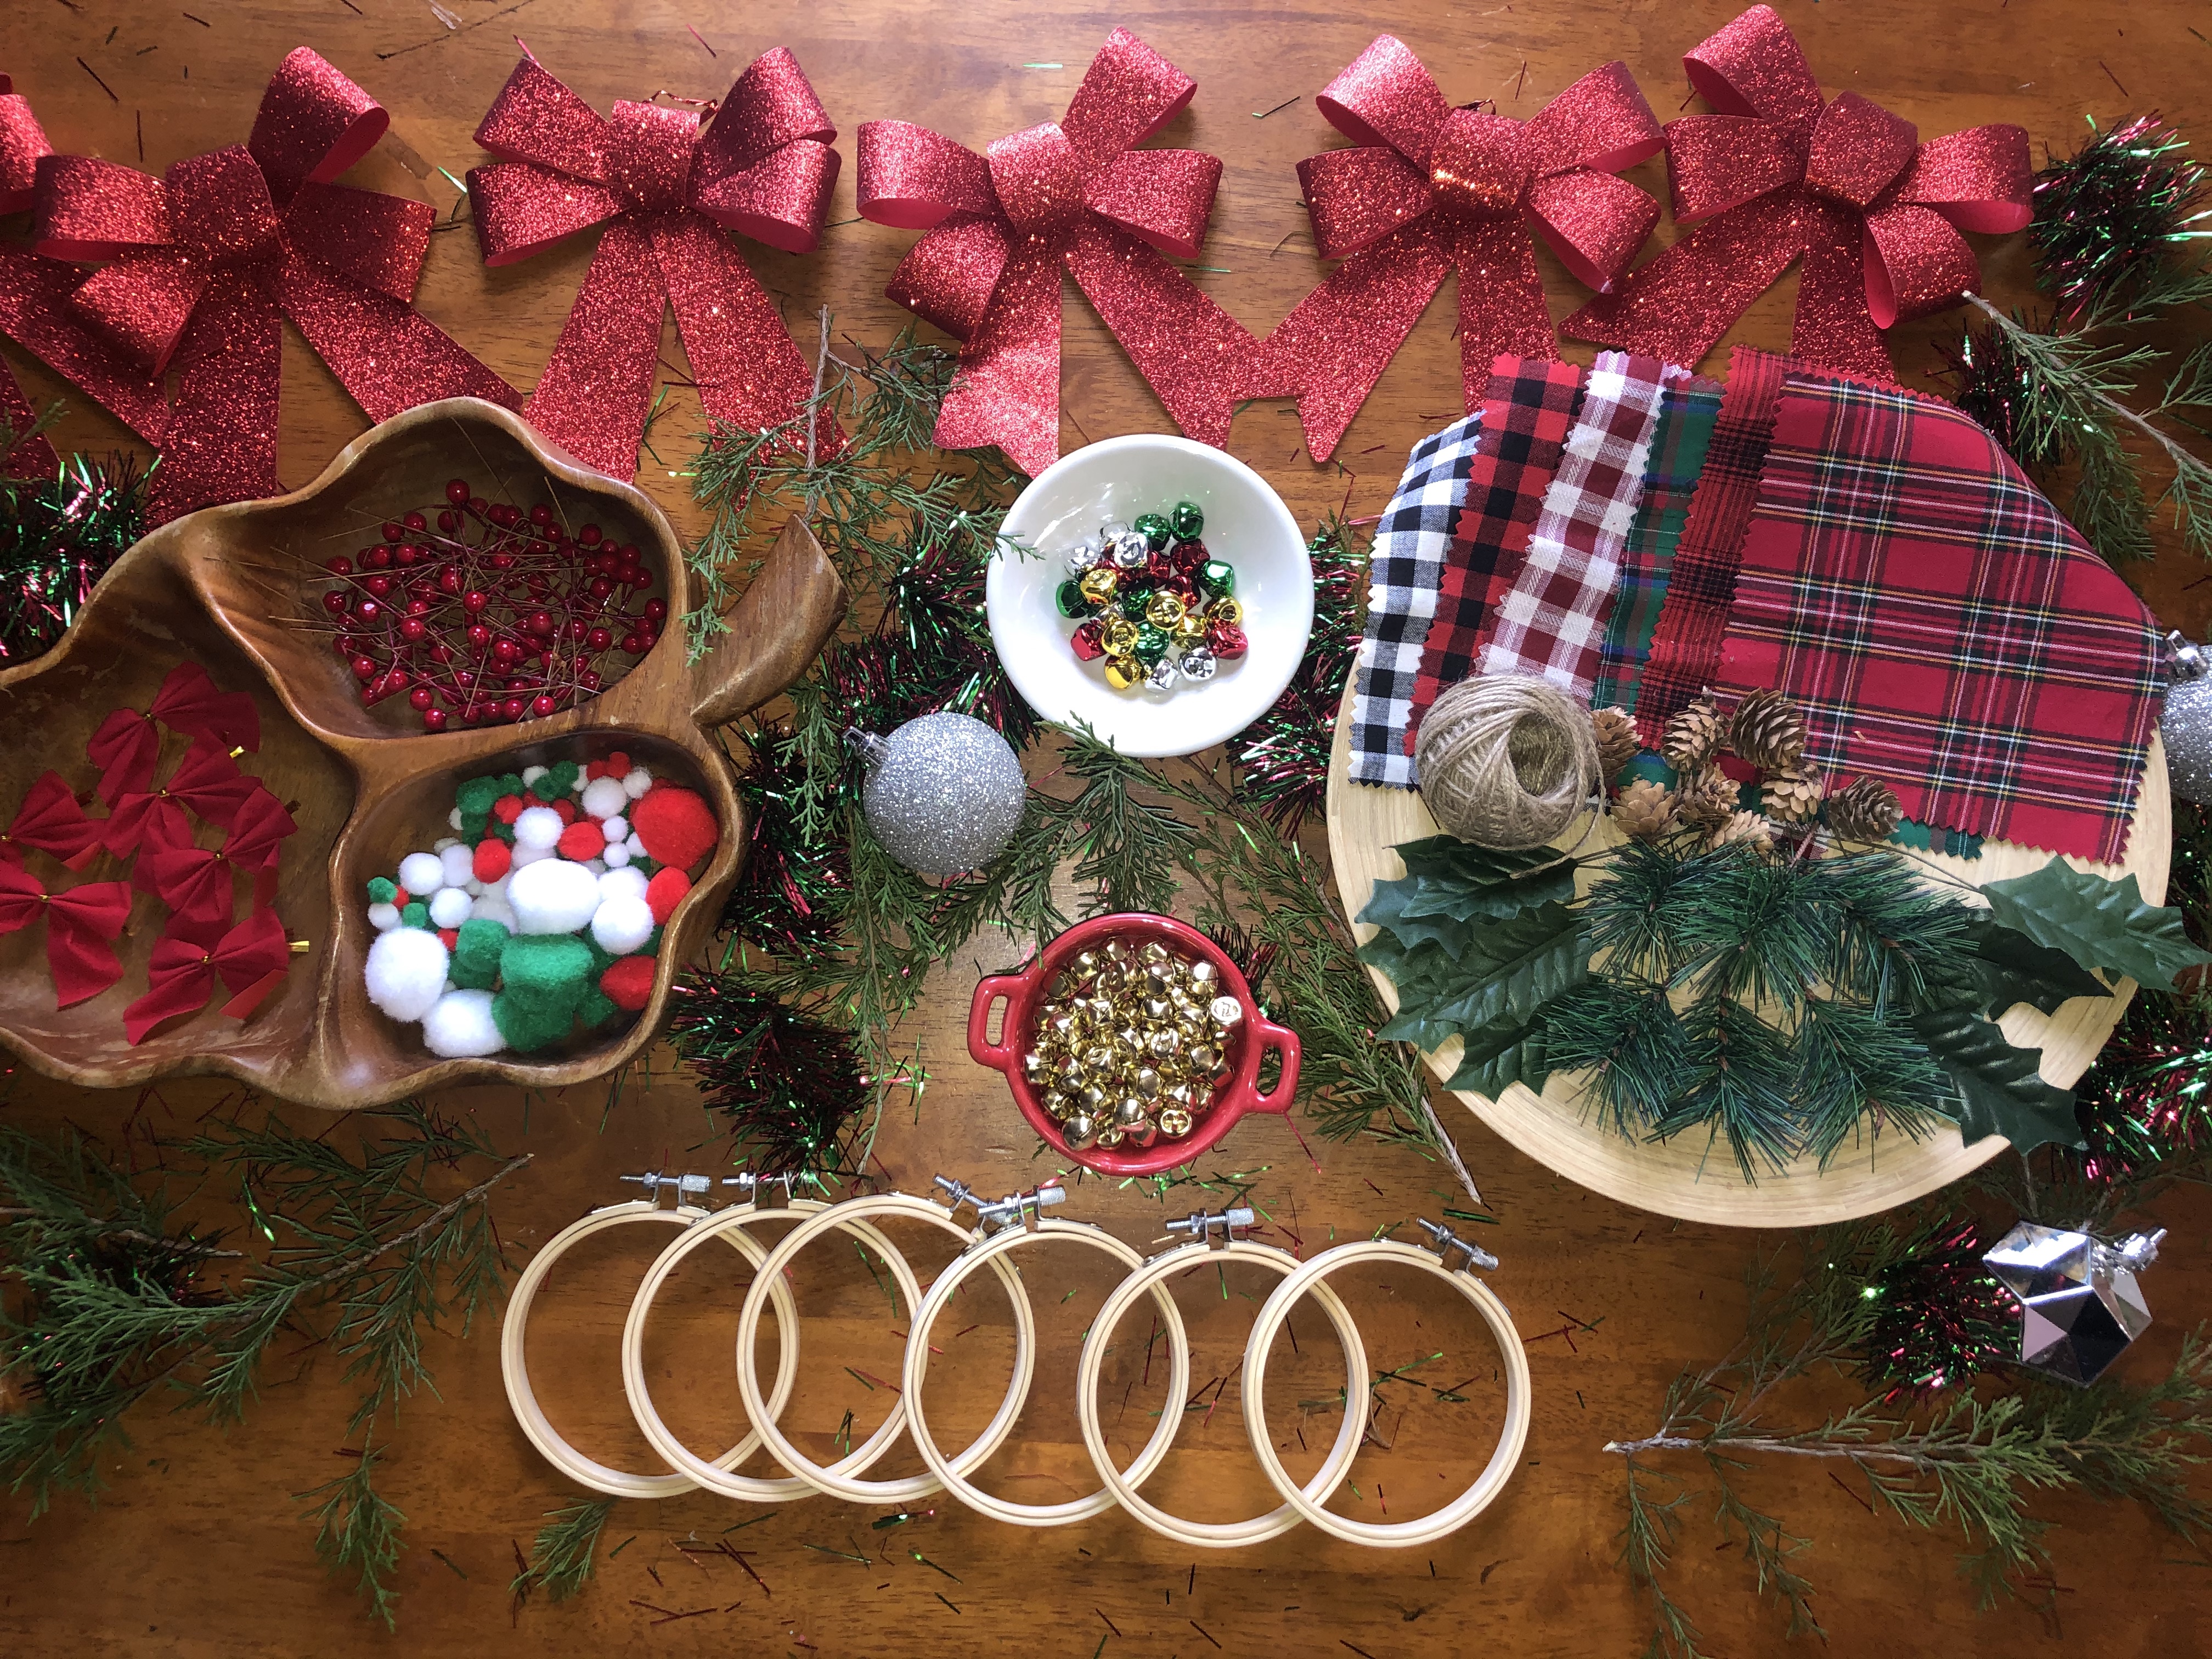 DIY Embroidery Hoop Christmas Ornaments